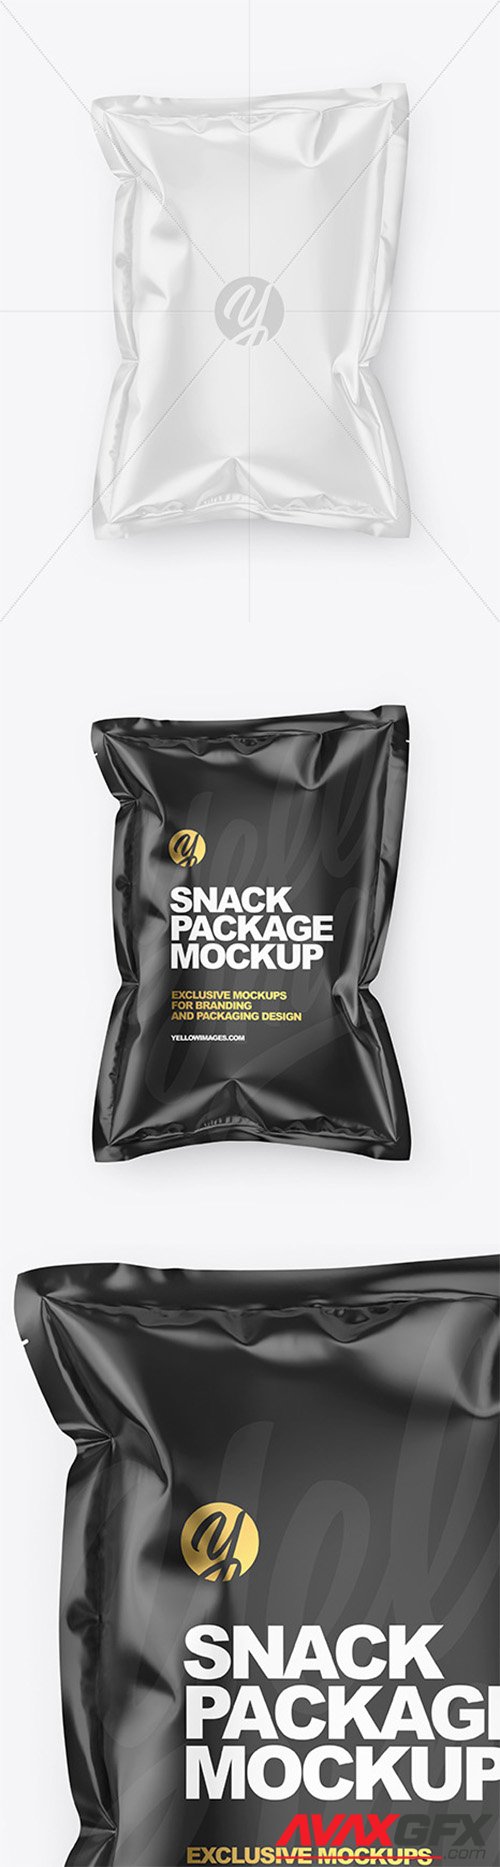 Glossy Snack Package Mockup 78538 TIF